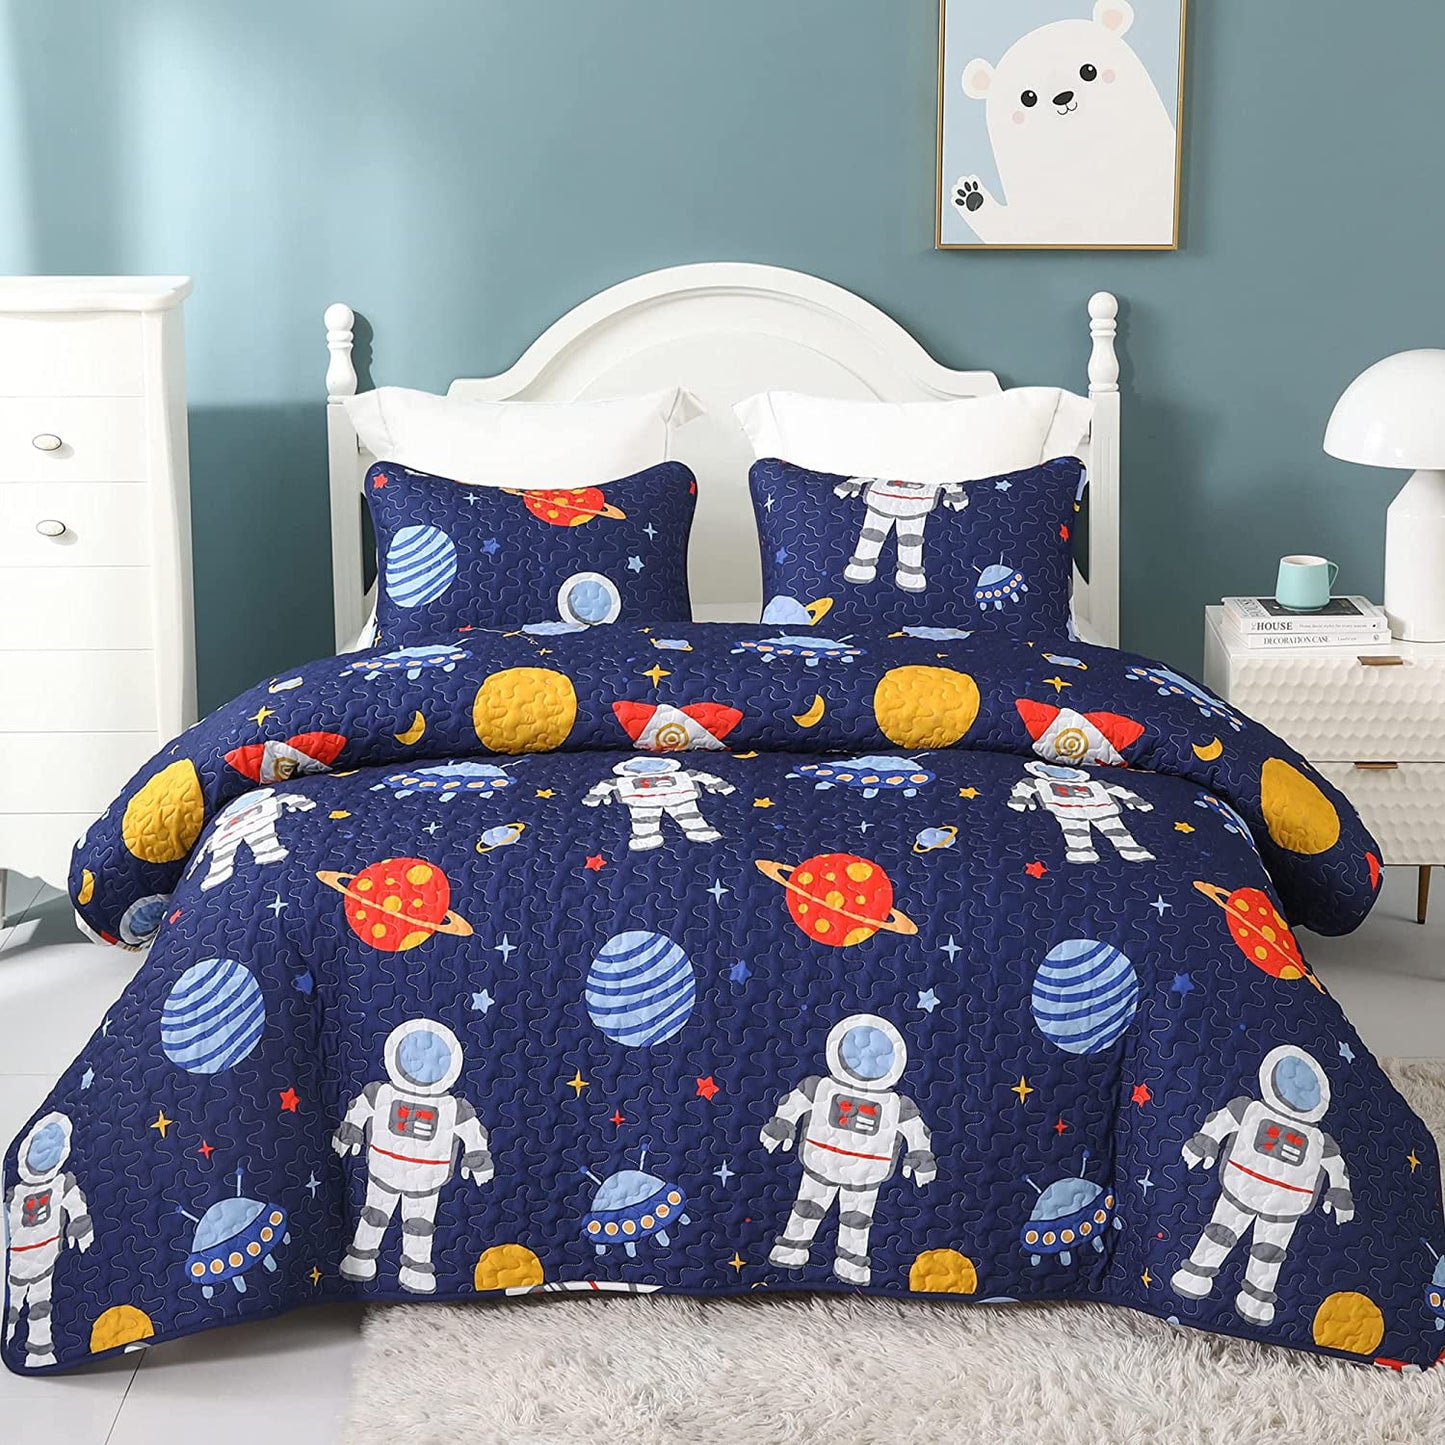 Whale Flotilla Cartoon Kids Quilt Set Twin Size, Soft Kids Bedding Set with Cute Astronaut Patterns, Microfiber Lightweight Bedspread Coverlet for Boys and Girls